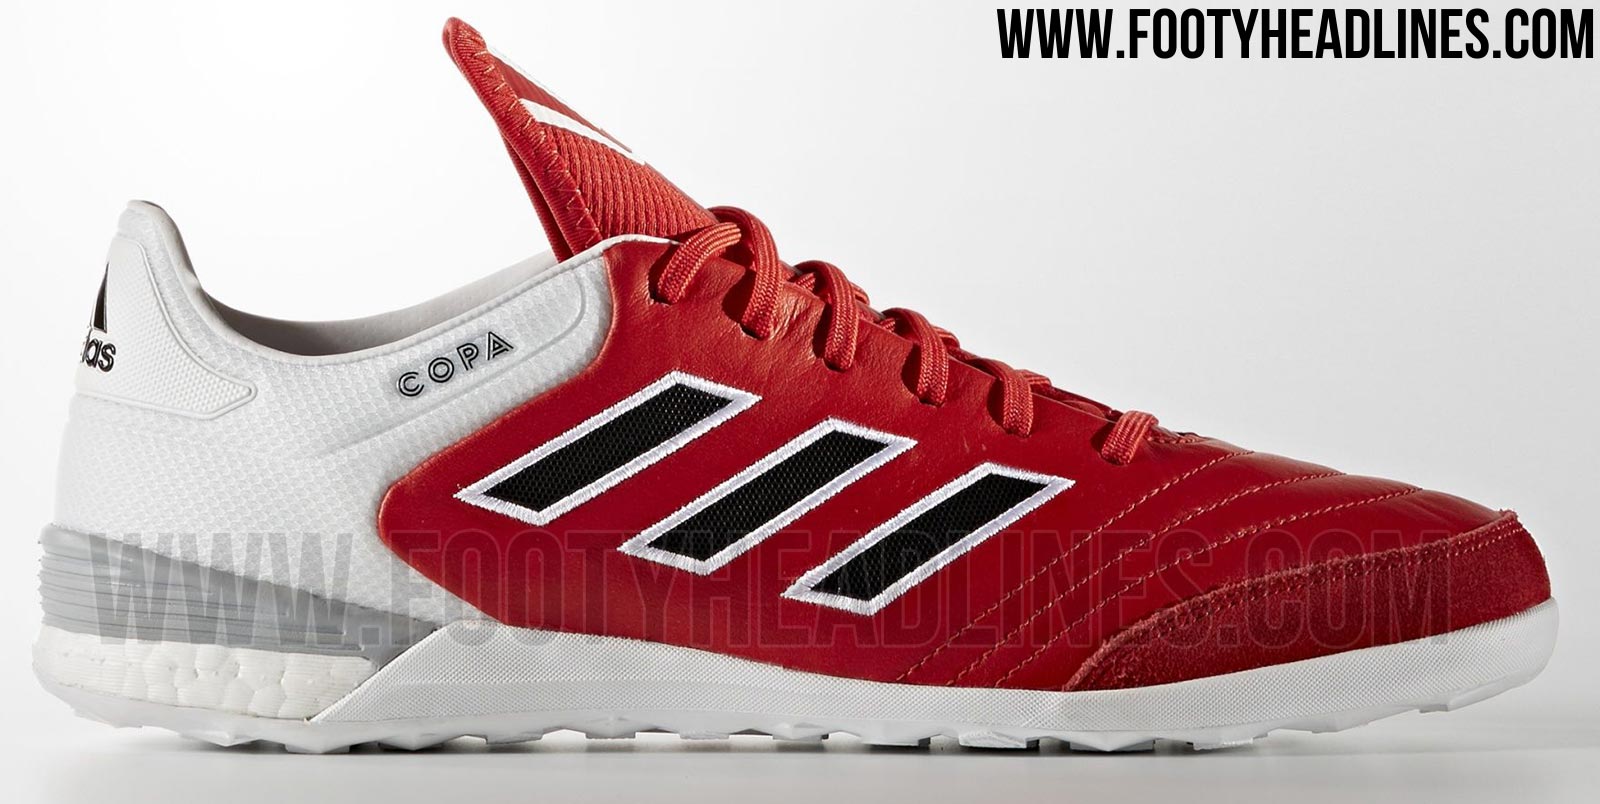 Adidas Copa Tango 17 Indoor and Turf Released - Footy Headlines